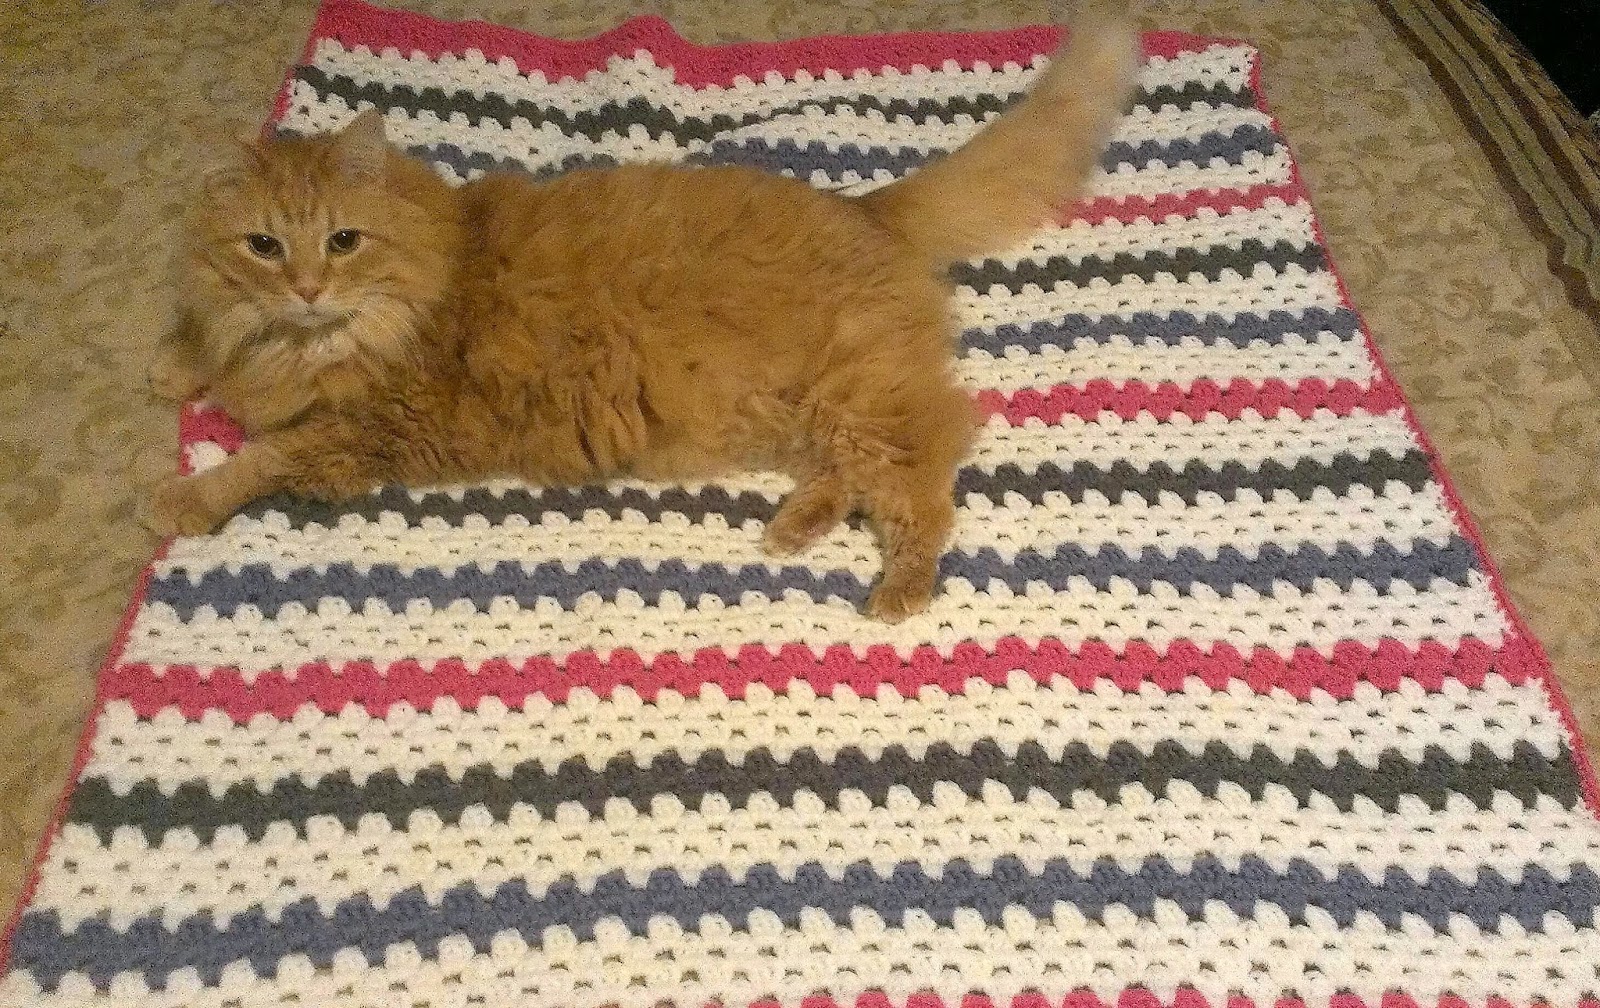 Illuminate Crochet: Cats Love Crochet (and Crochet Loves Them, Too!)